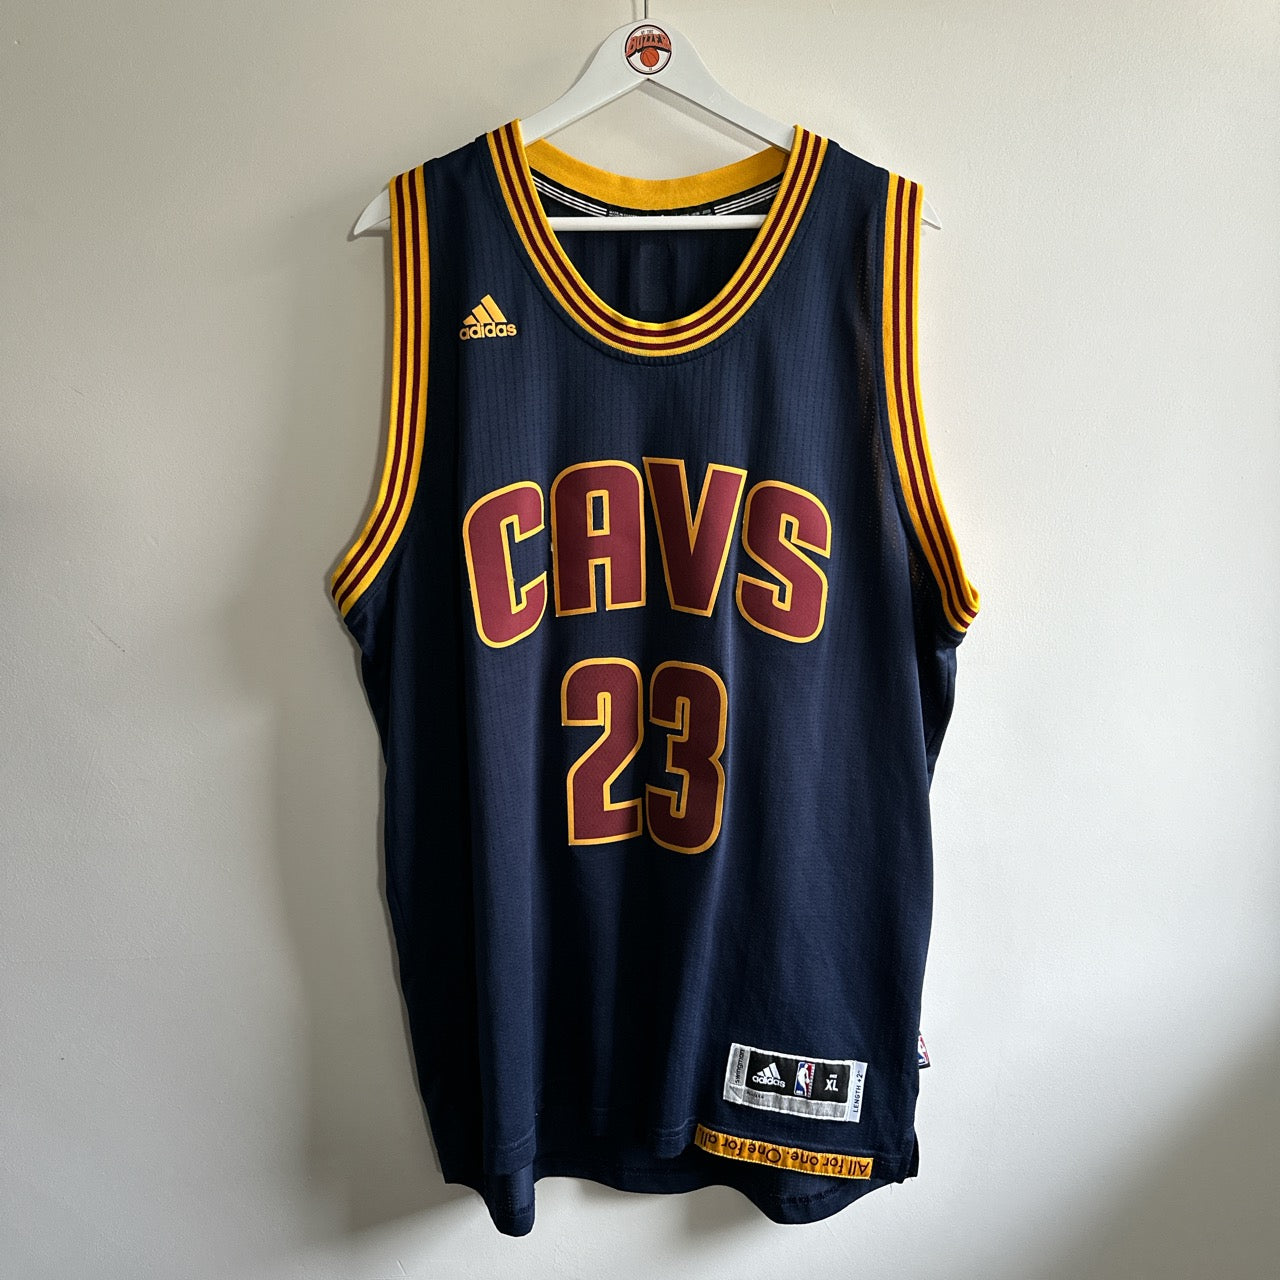 Cleveland Cavaliers Lebron James Adidas jersey - XL